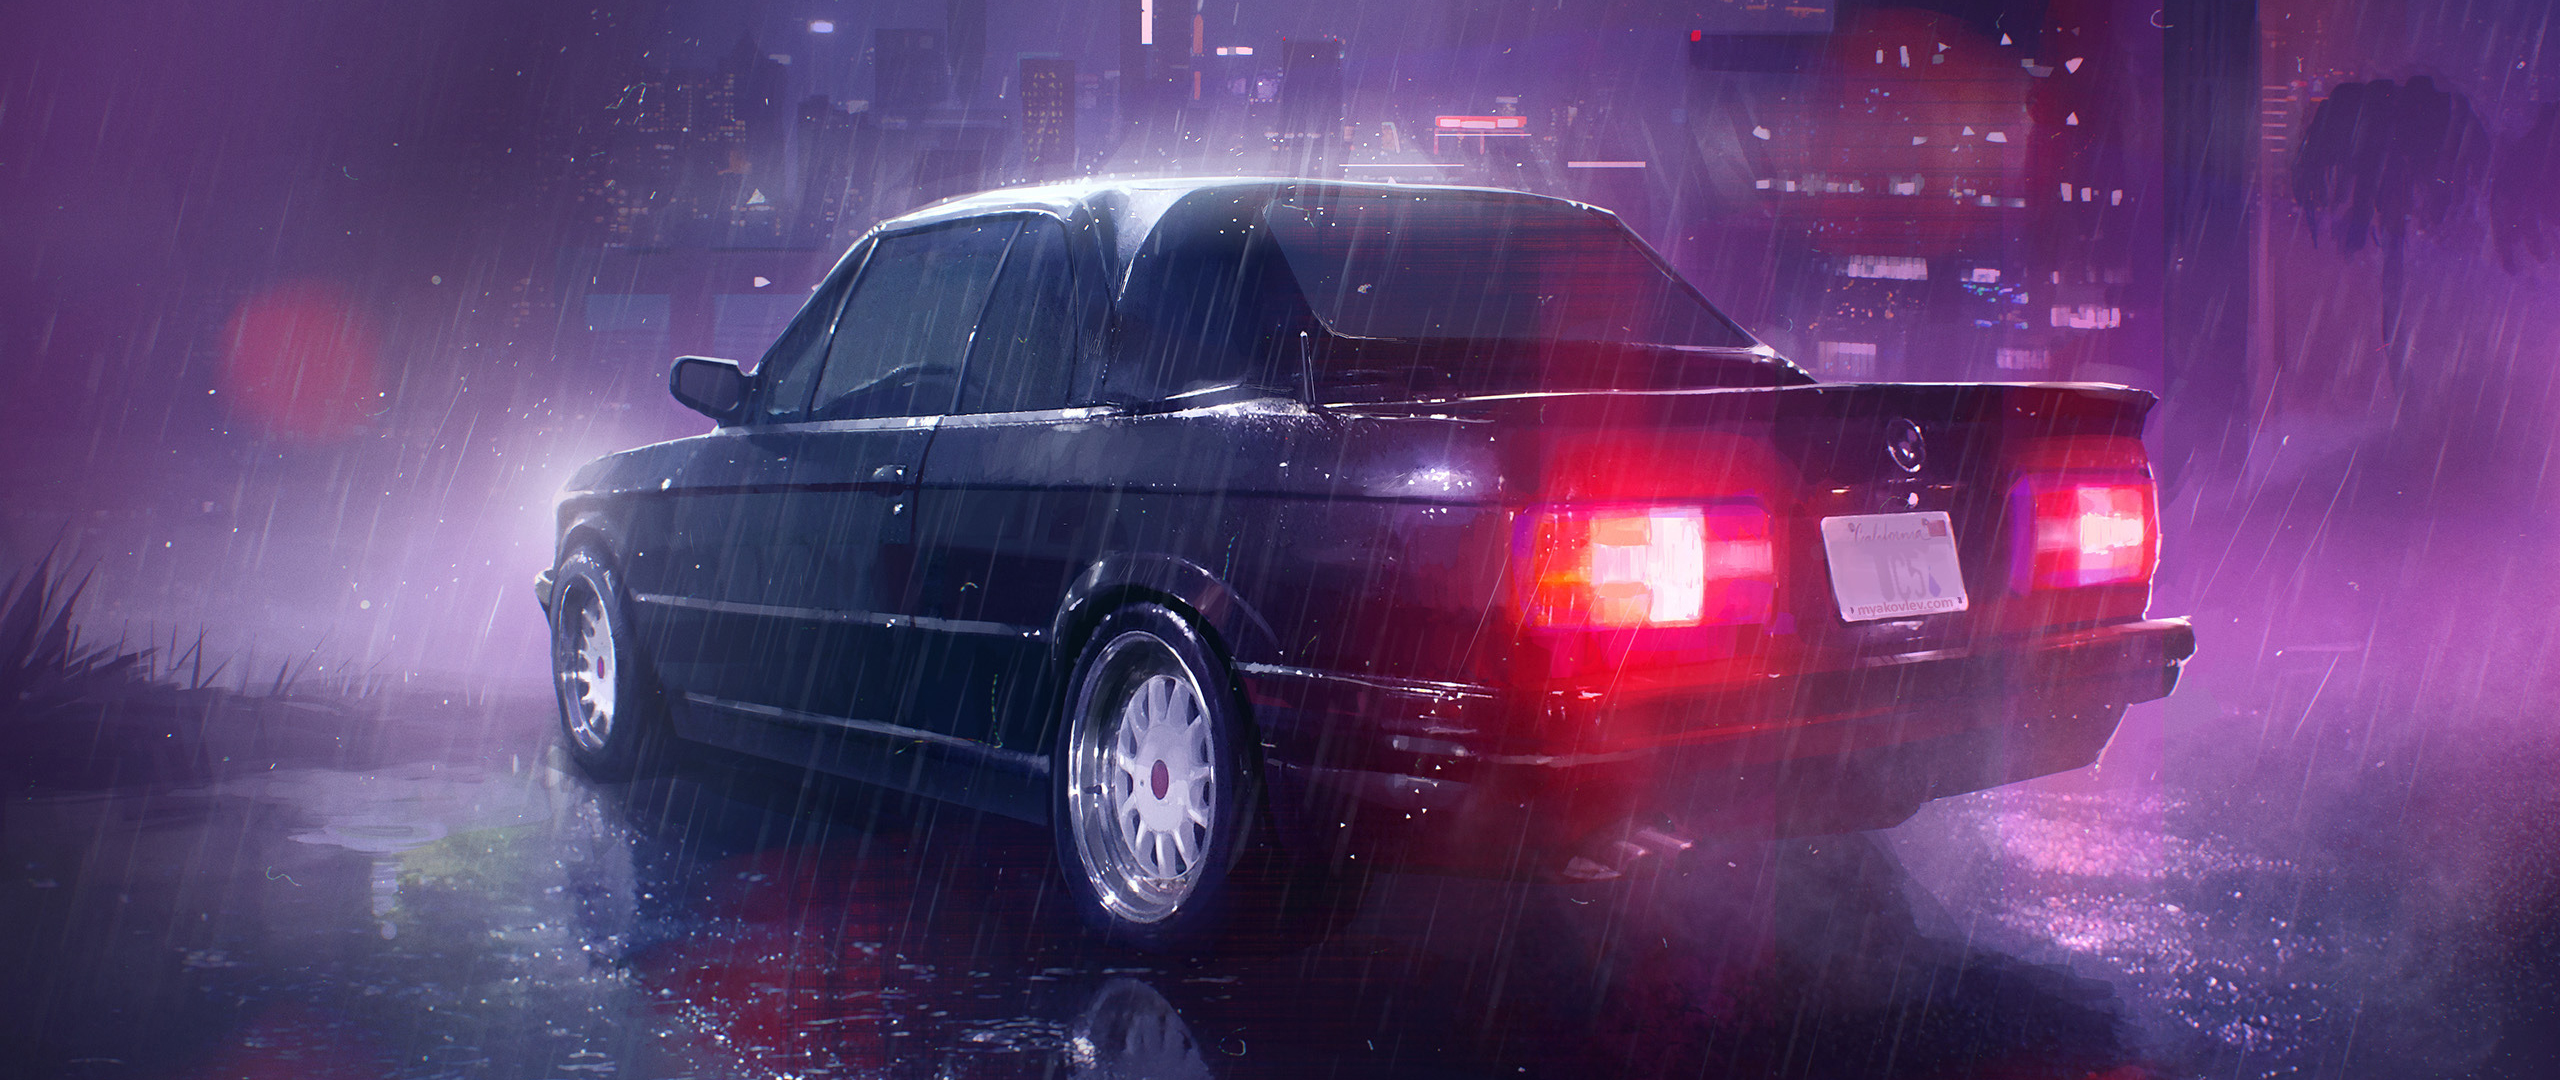 Rain, neon lights, taillight, car, art, 2560x1080 wallpaper